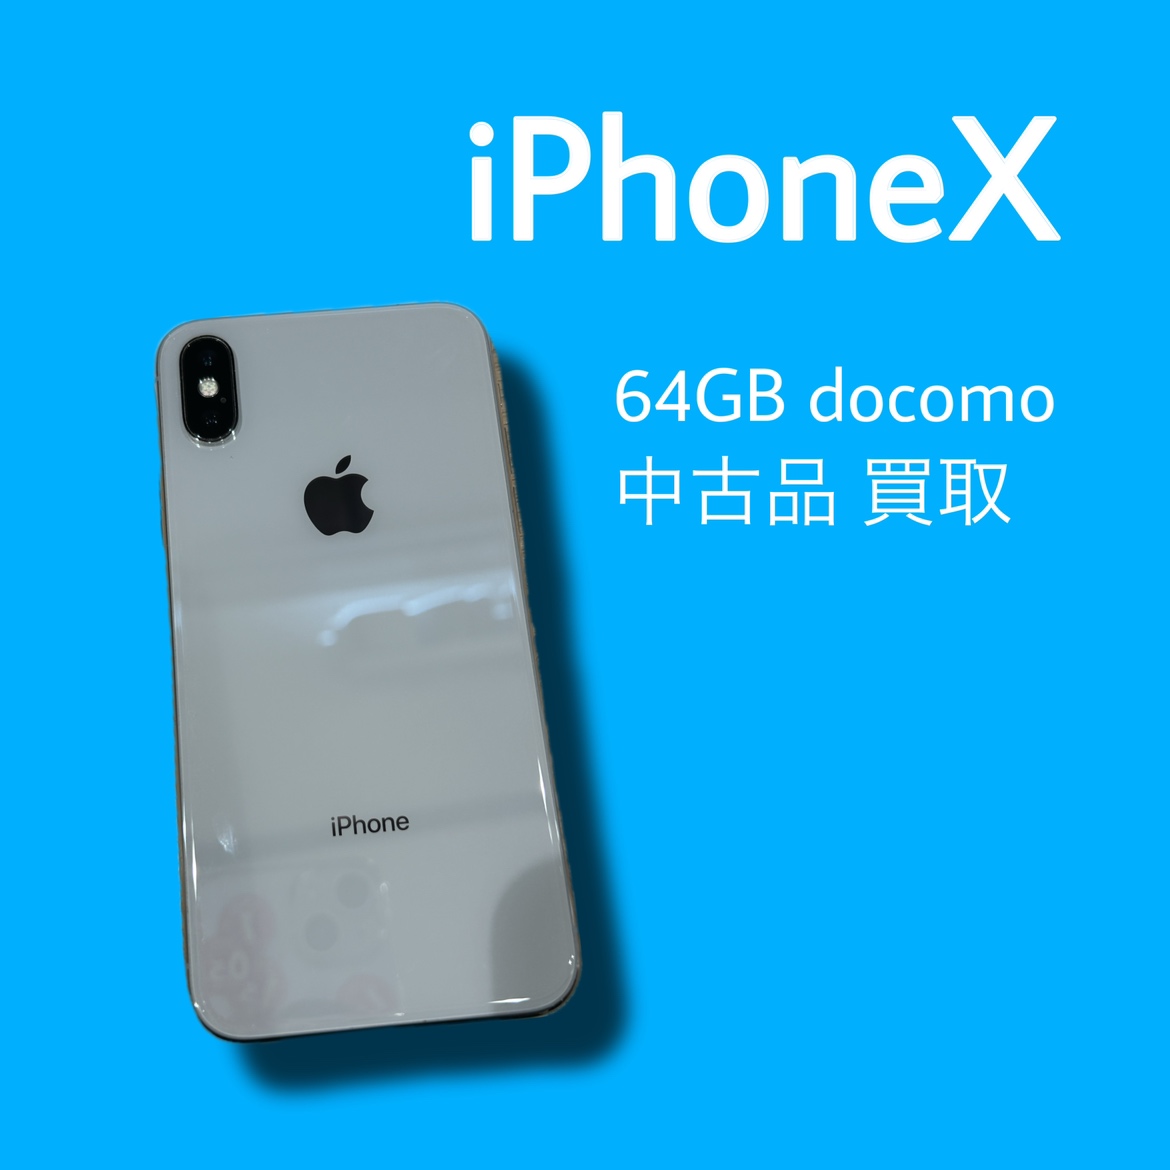 iPhoneX・64GB・docomo・ネット制限〇【天神地下街店】